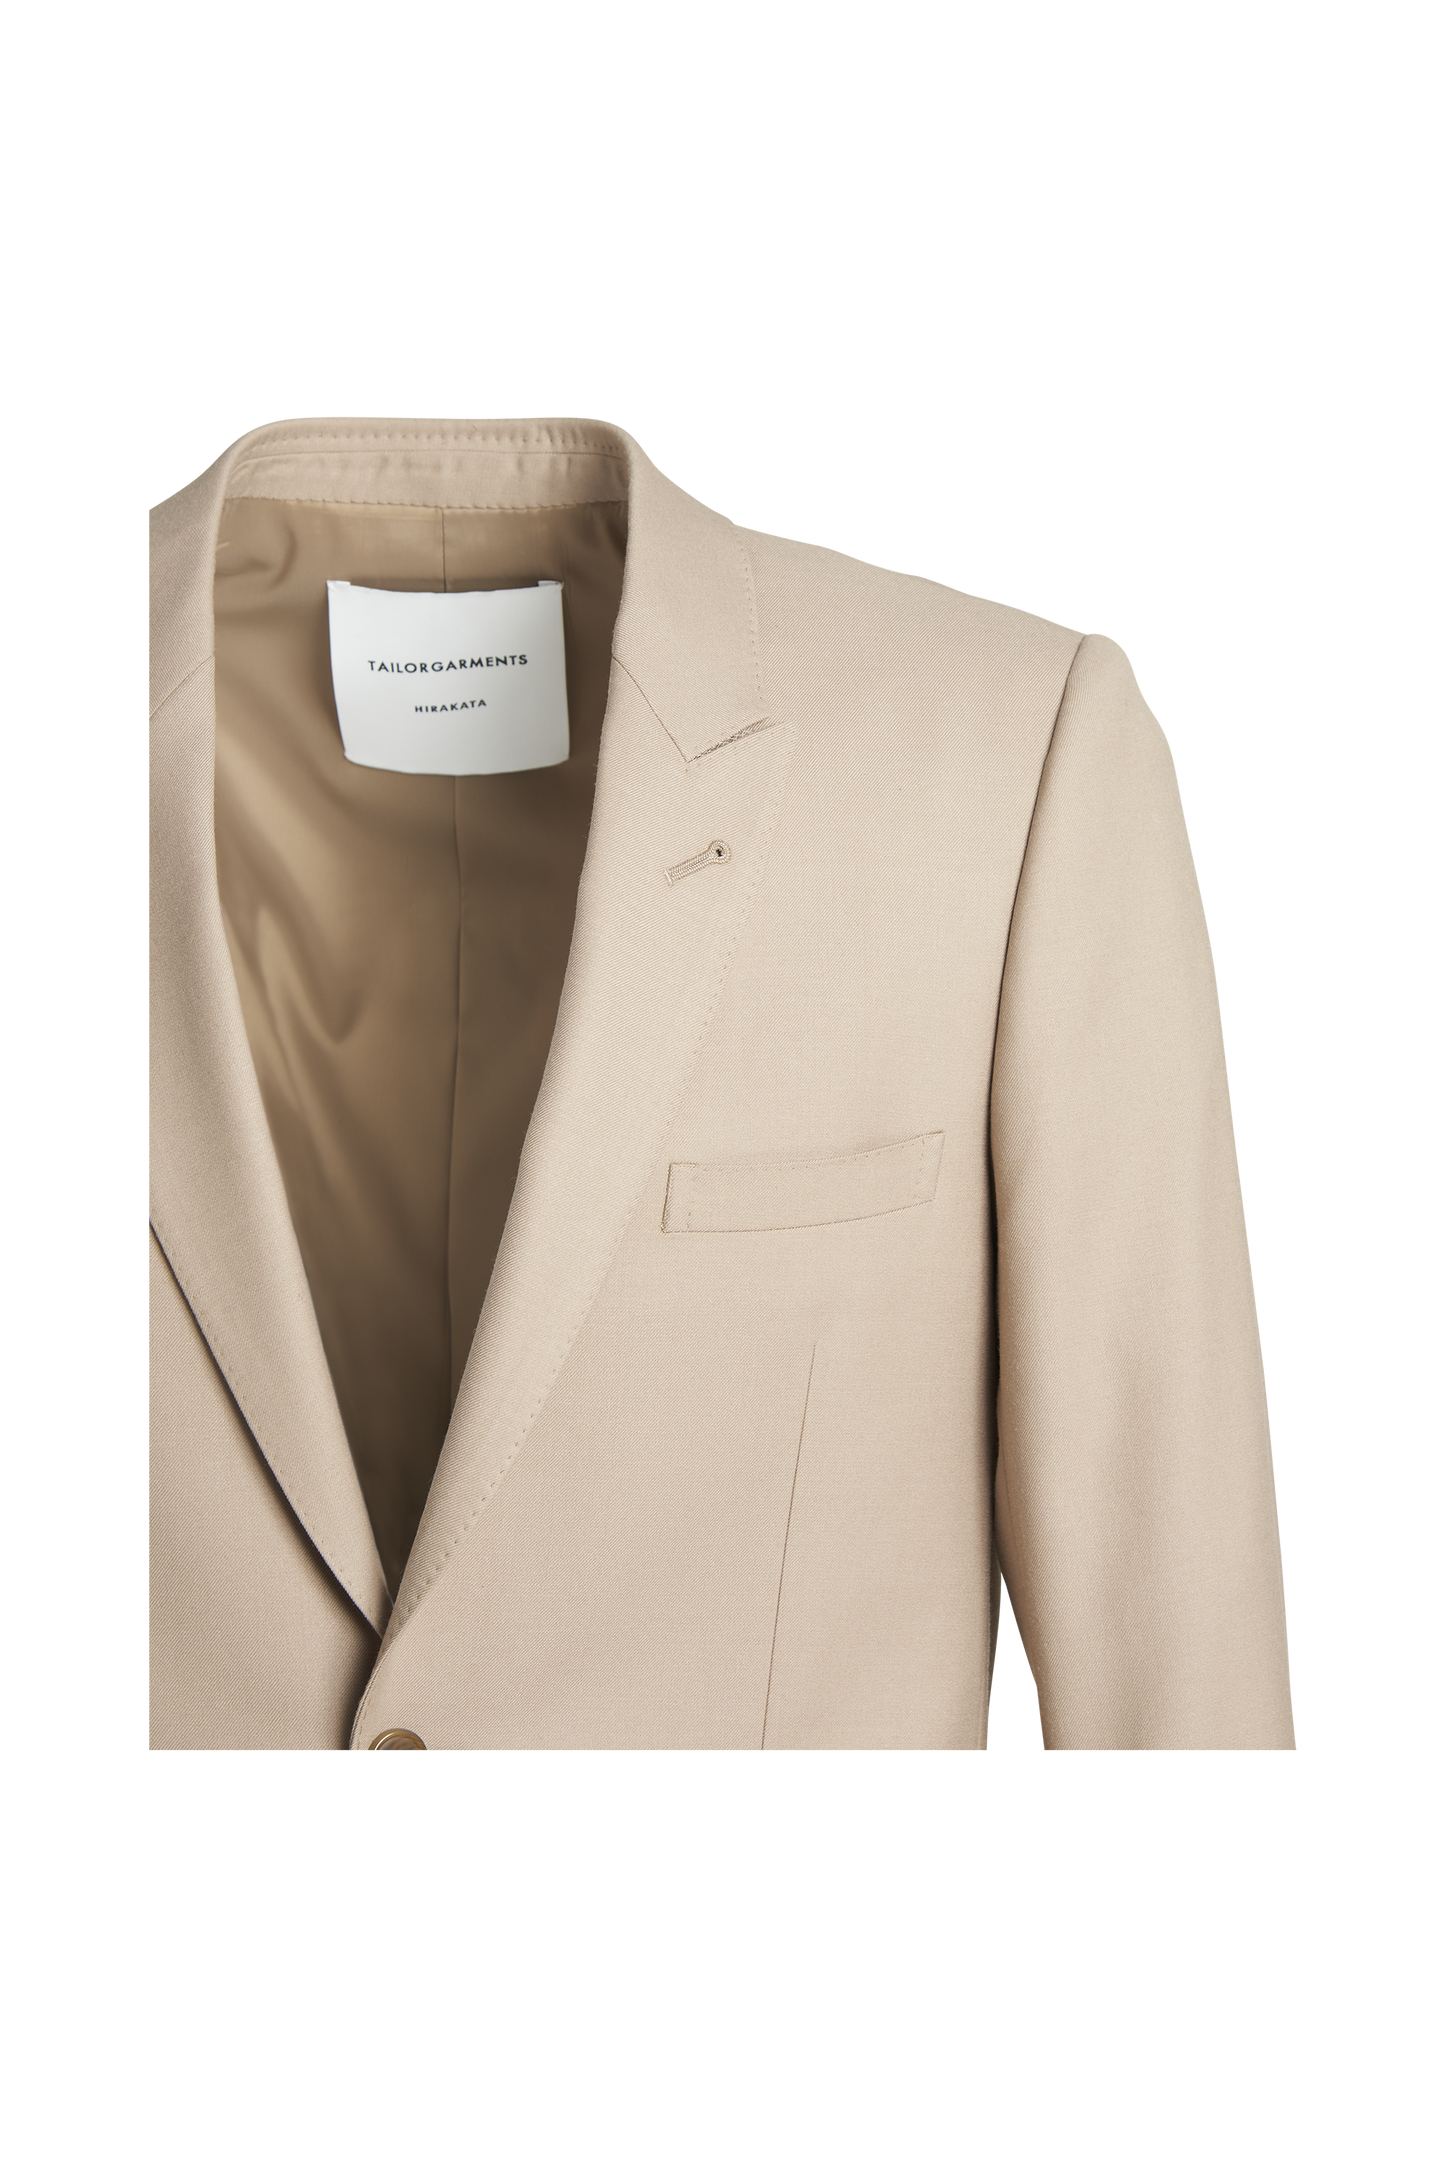 <span>Slim Short Line Suit</span><br>tex No. 14600 / HM / セットアップ</span>